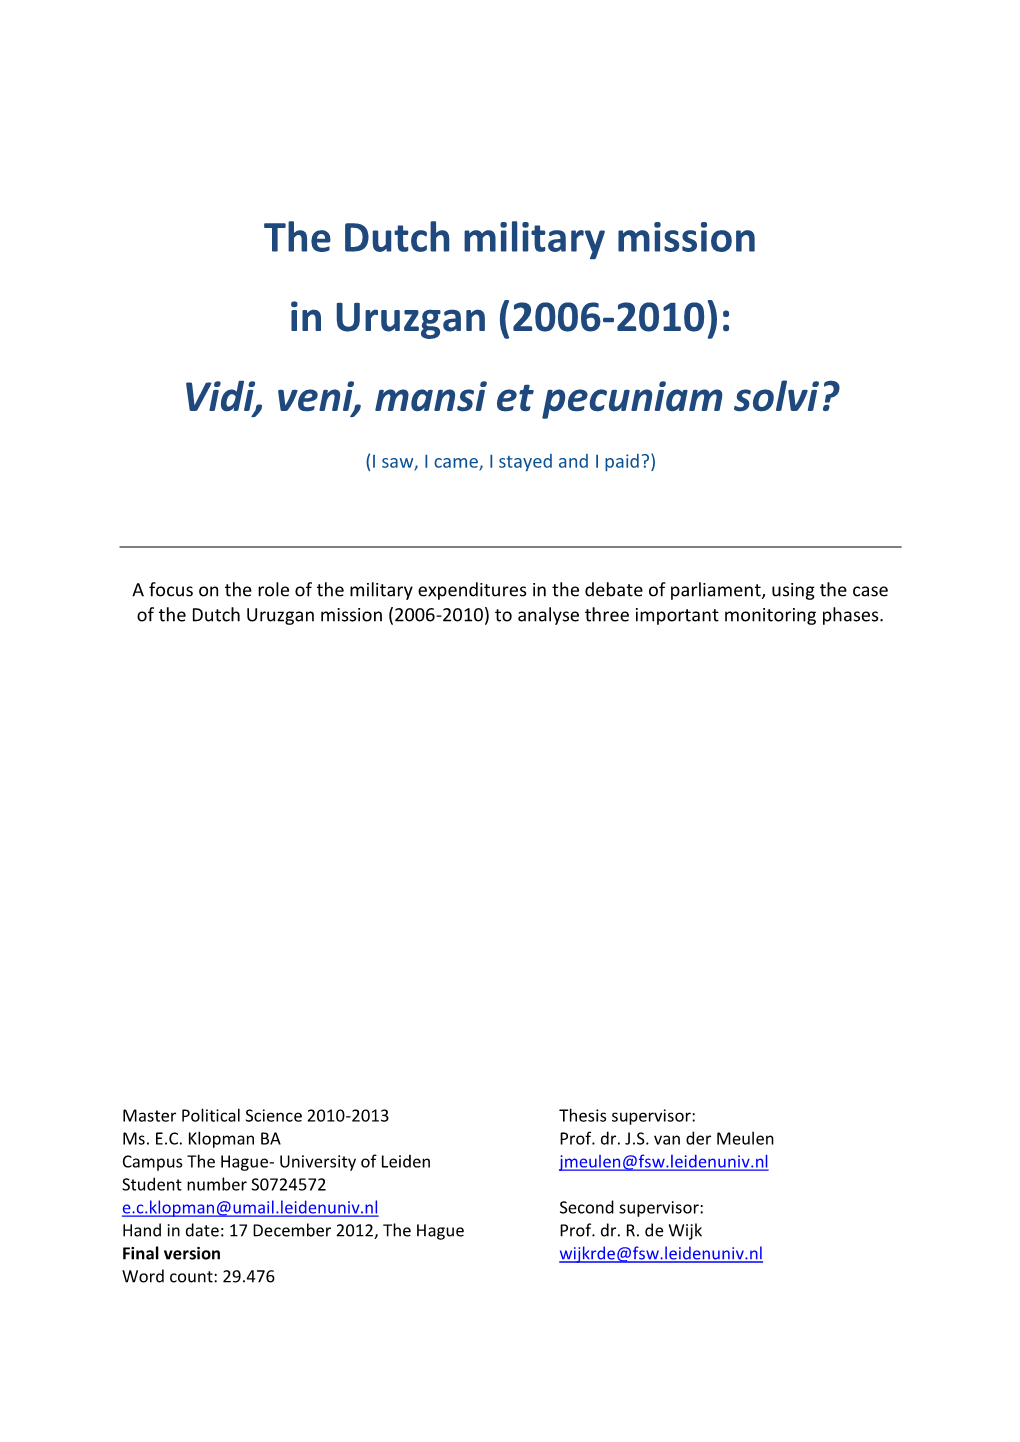 The Dutch Military Mission in Uruzgan (2006-2010): Vidi, Veni, Mansi Et Pecuniam Solvi?